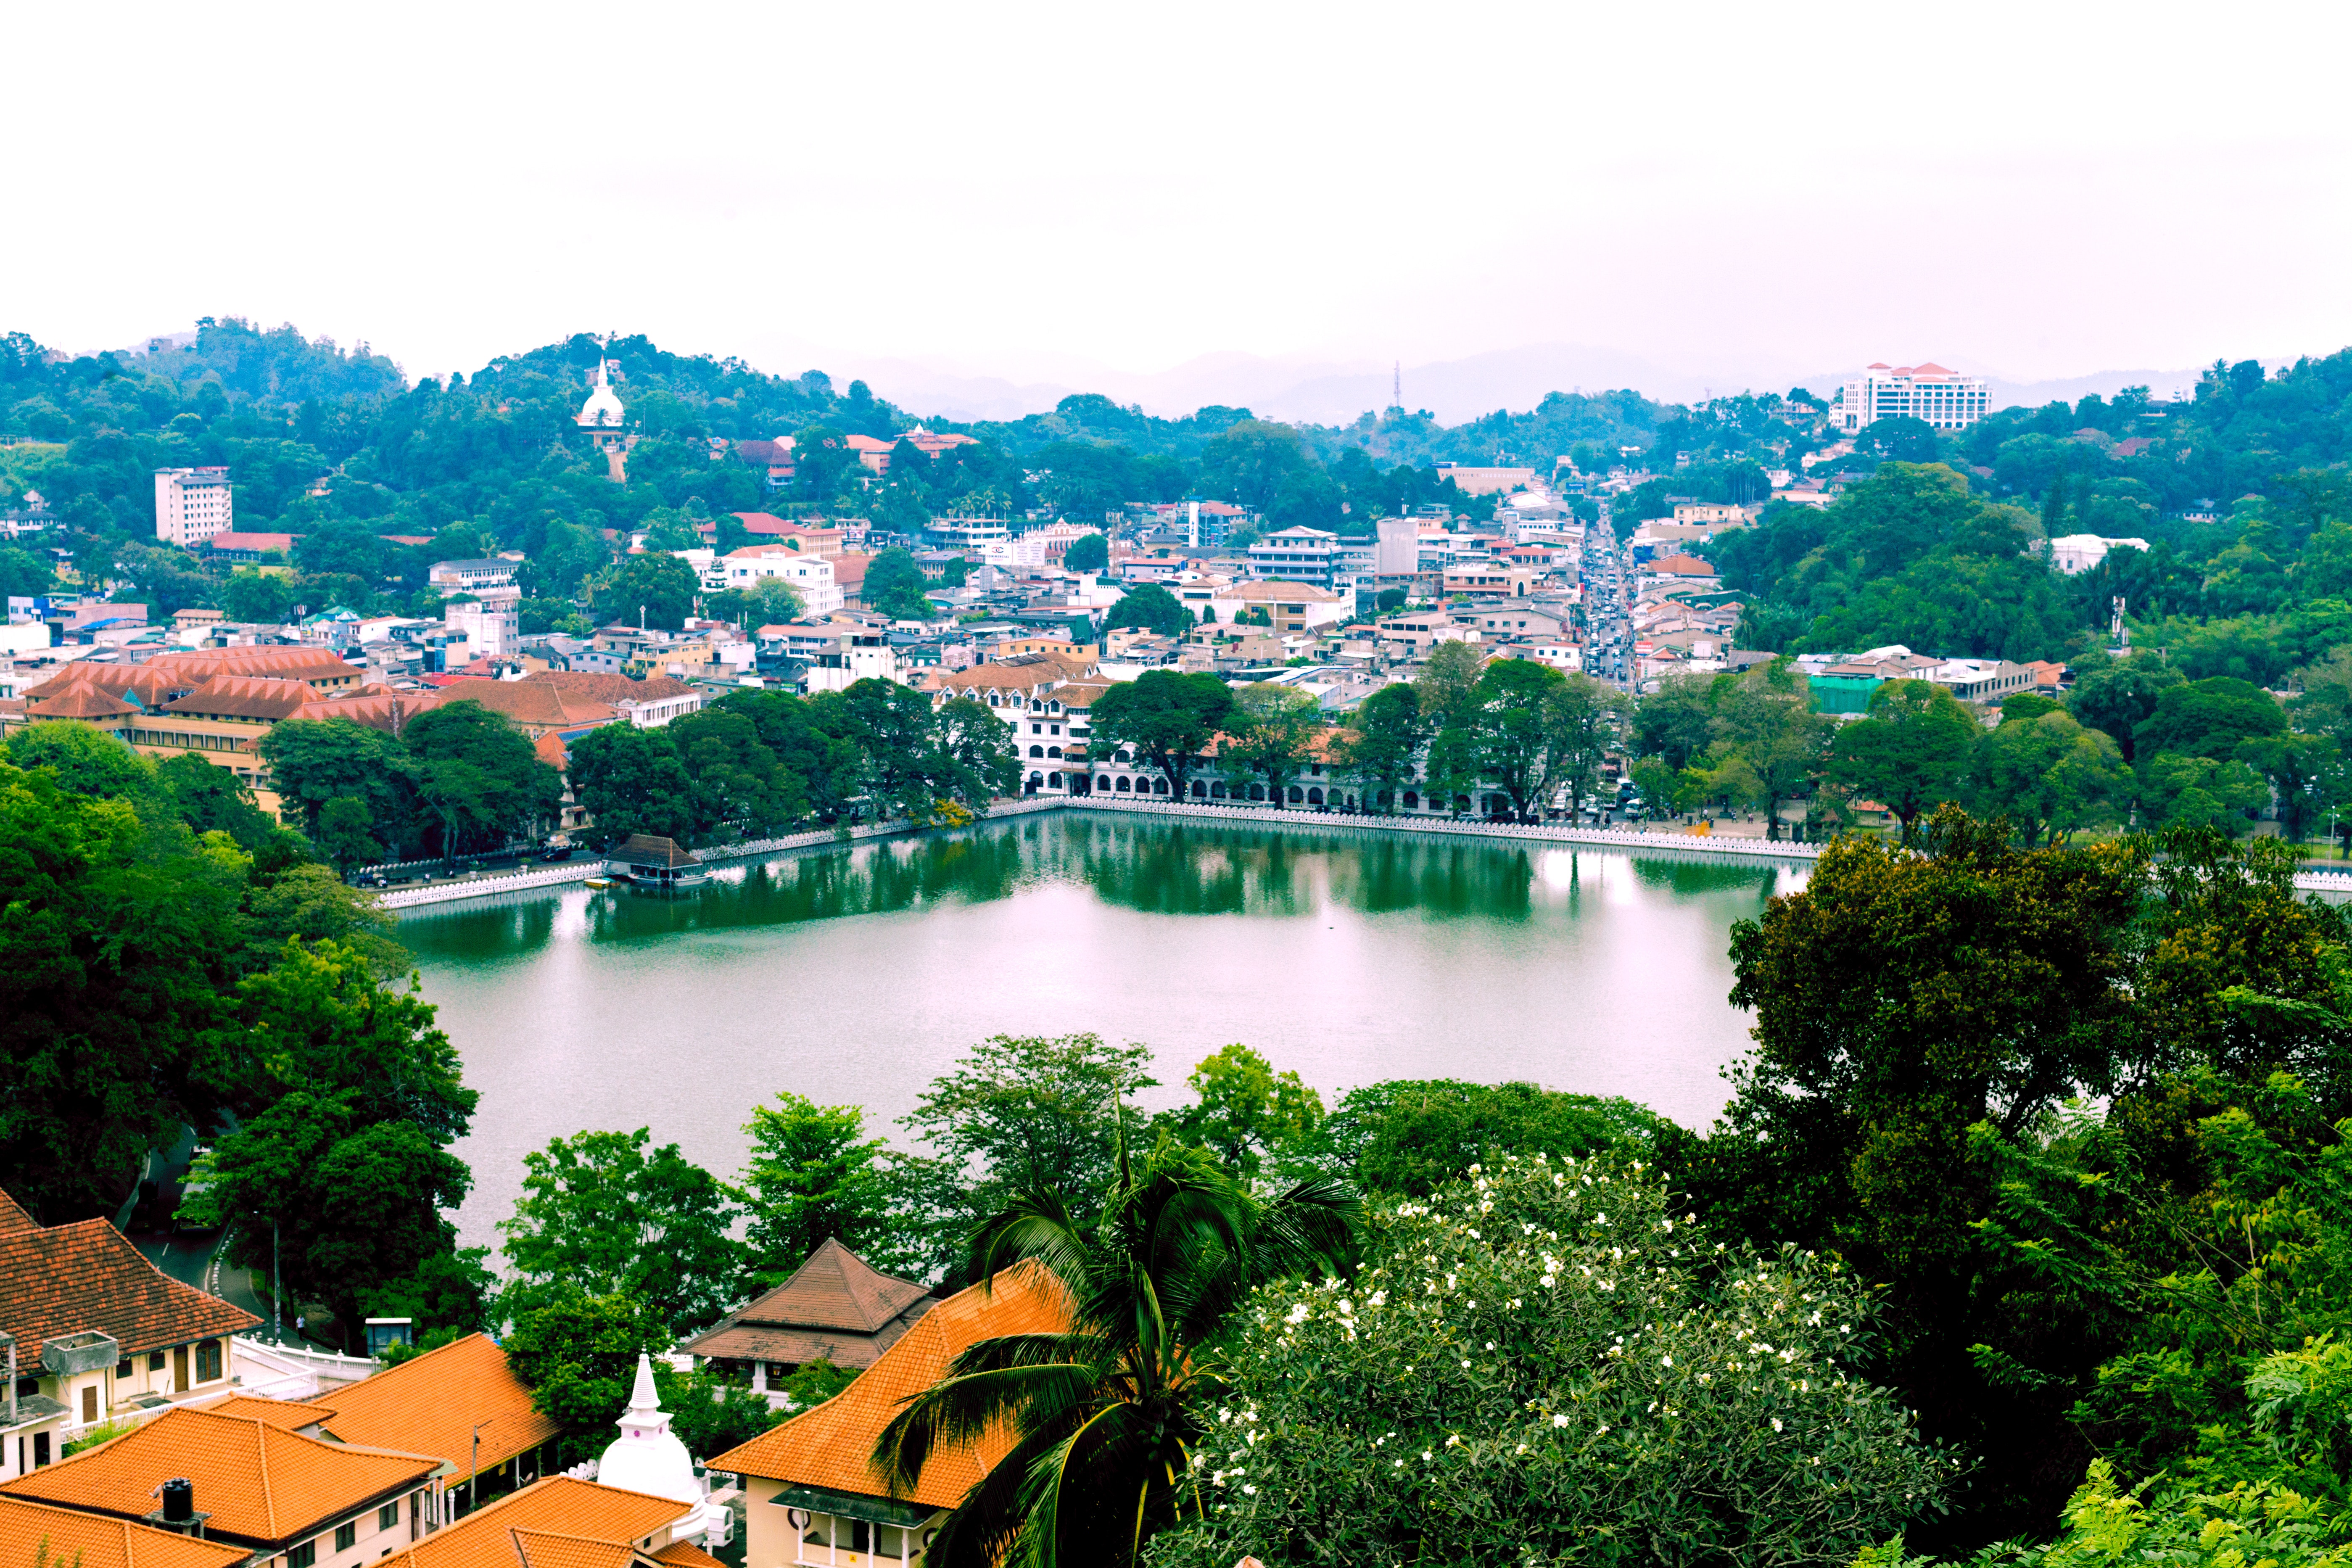 Ariel view of a Sri Lanka City